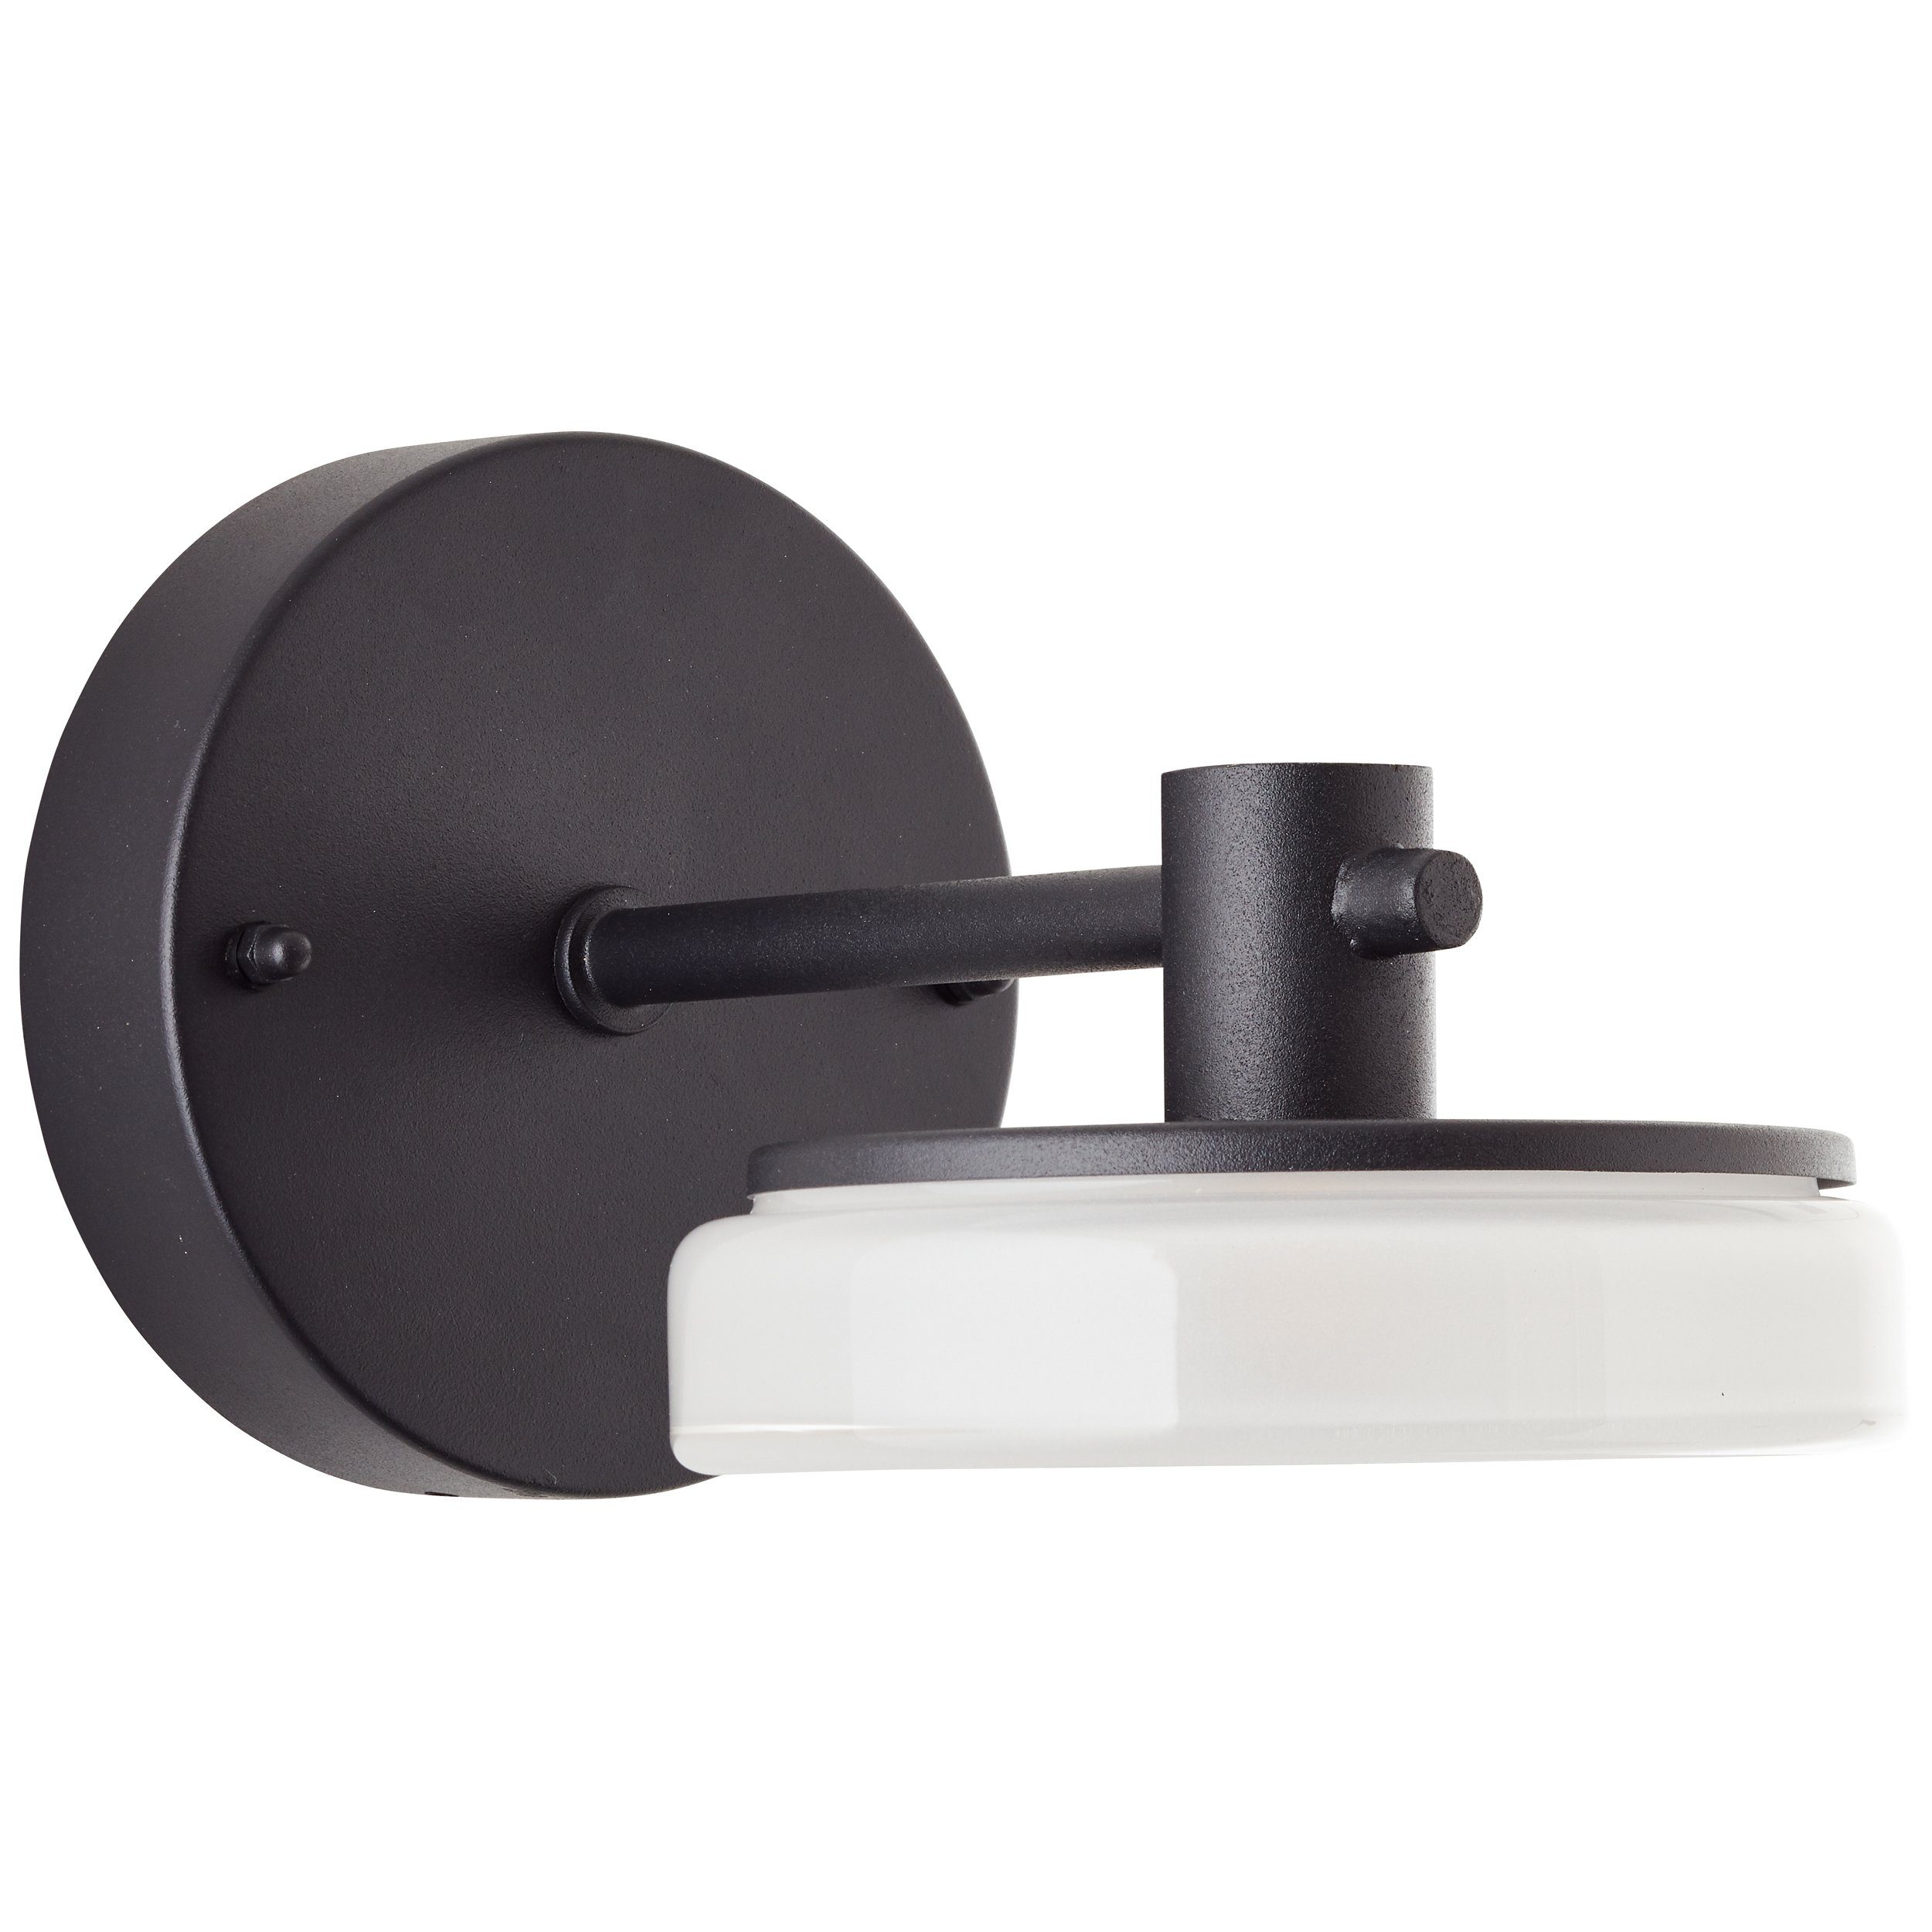 Brilliant LED Außen-Wandleuchte Seaham, Seaham integrie schwarz, Außenwandleuchte Metall/Glas, LED 1x sand LED